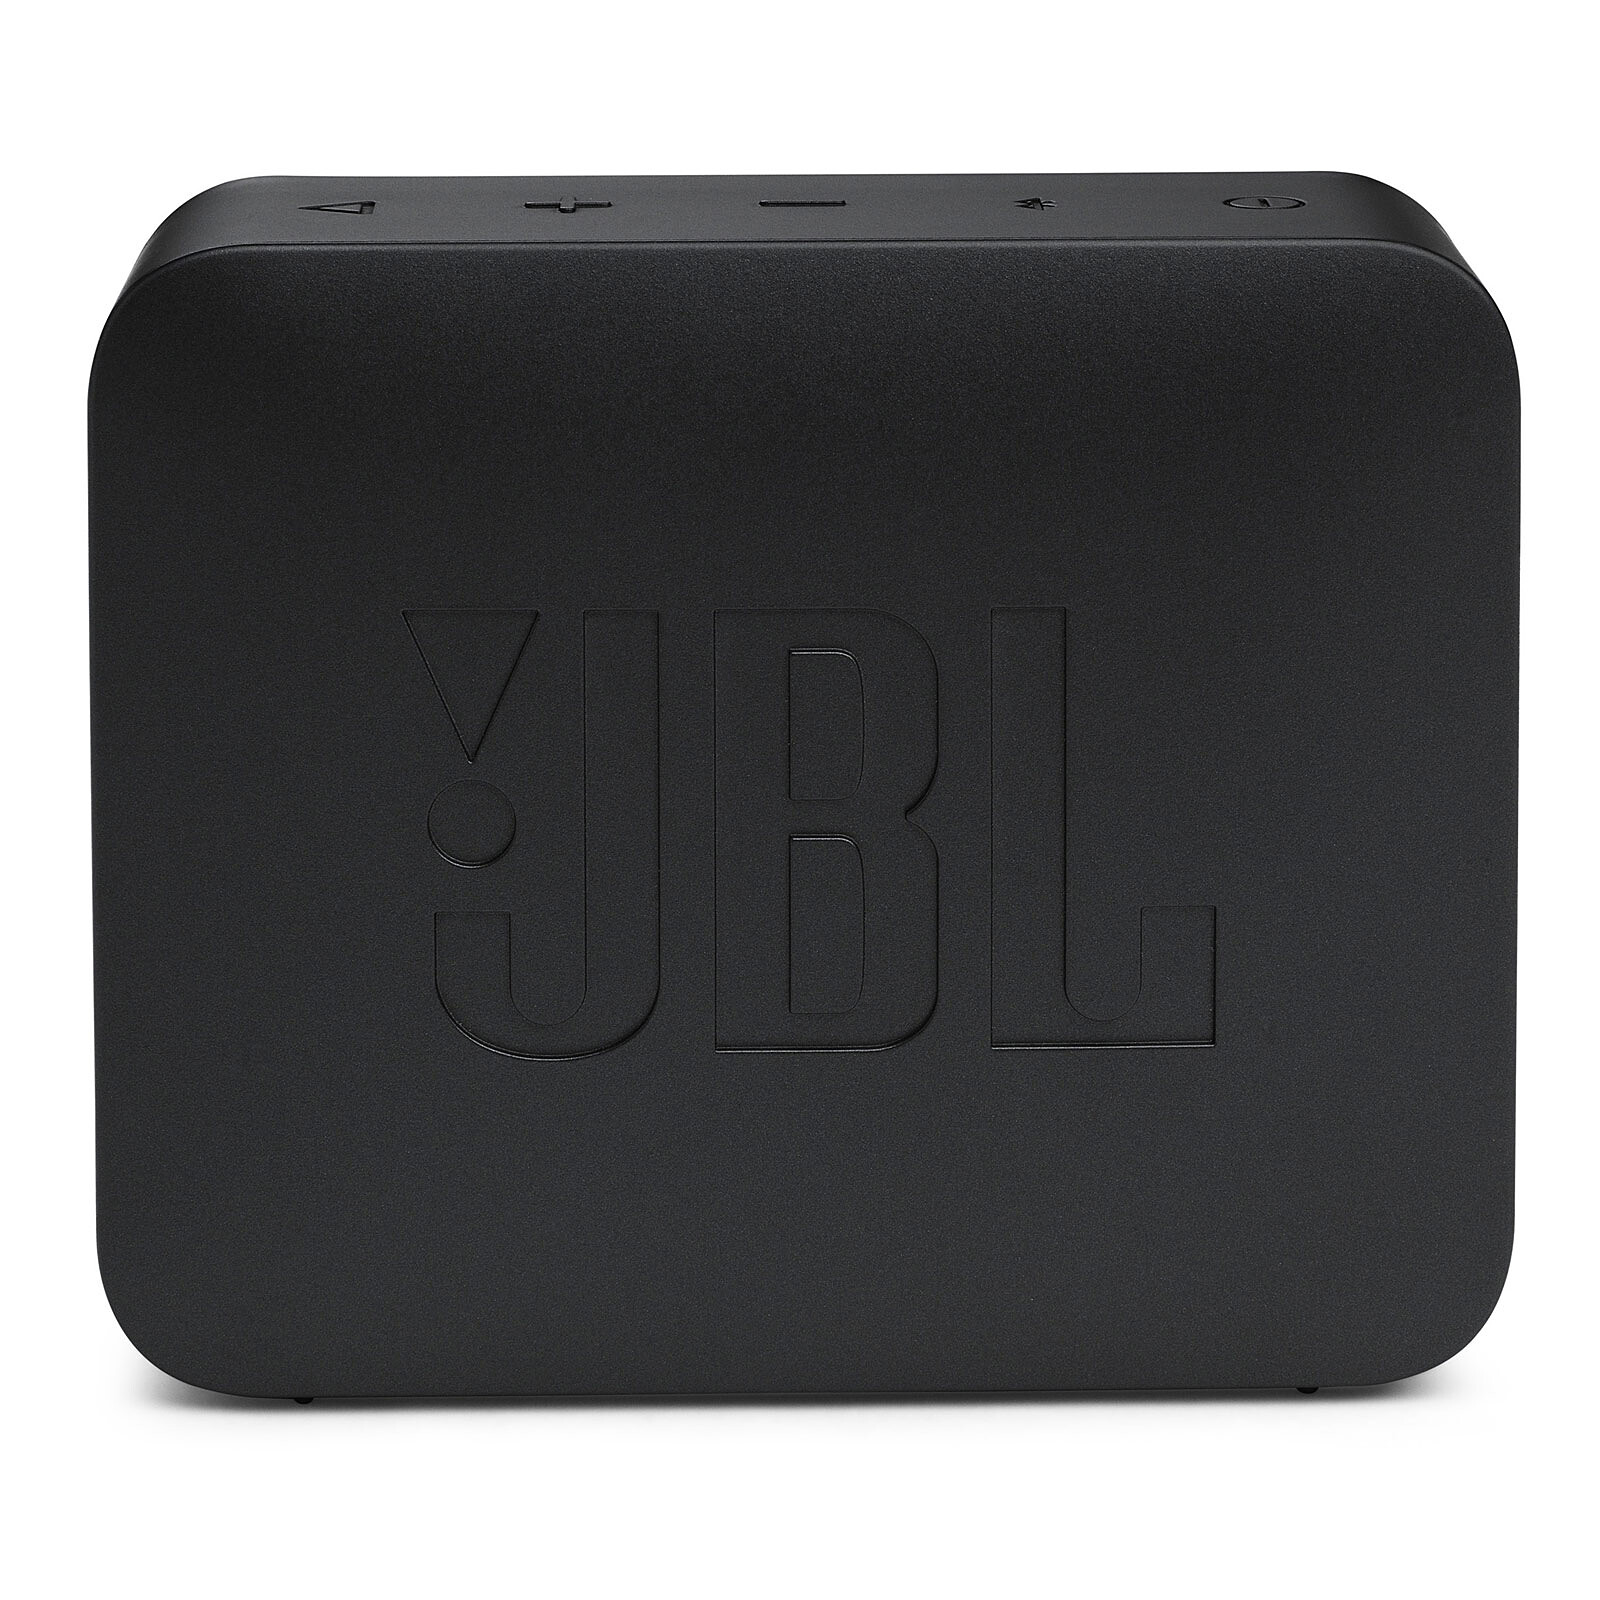 Altavoz inalámbrico  JBL Go Essential, 3.1 W, Bluetooth 4.2, Hasta 5  horas, IPX7, Rojo